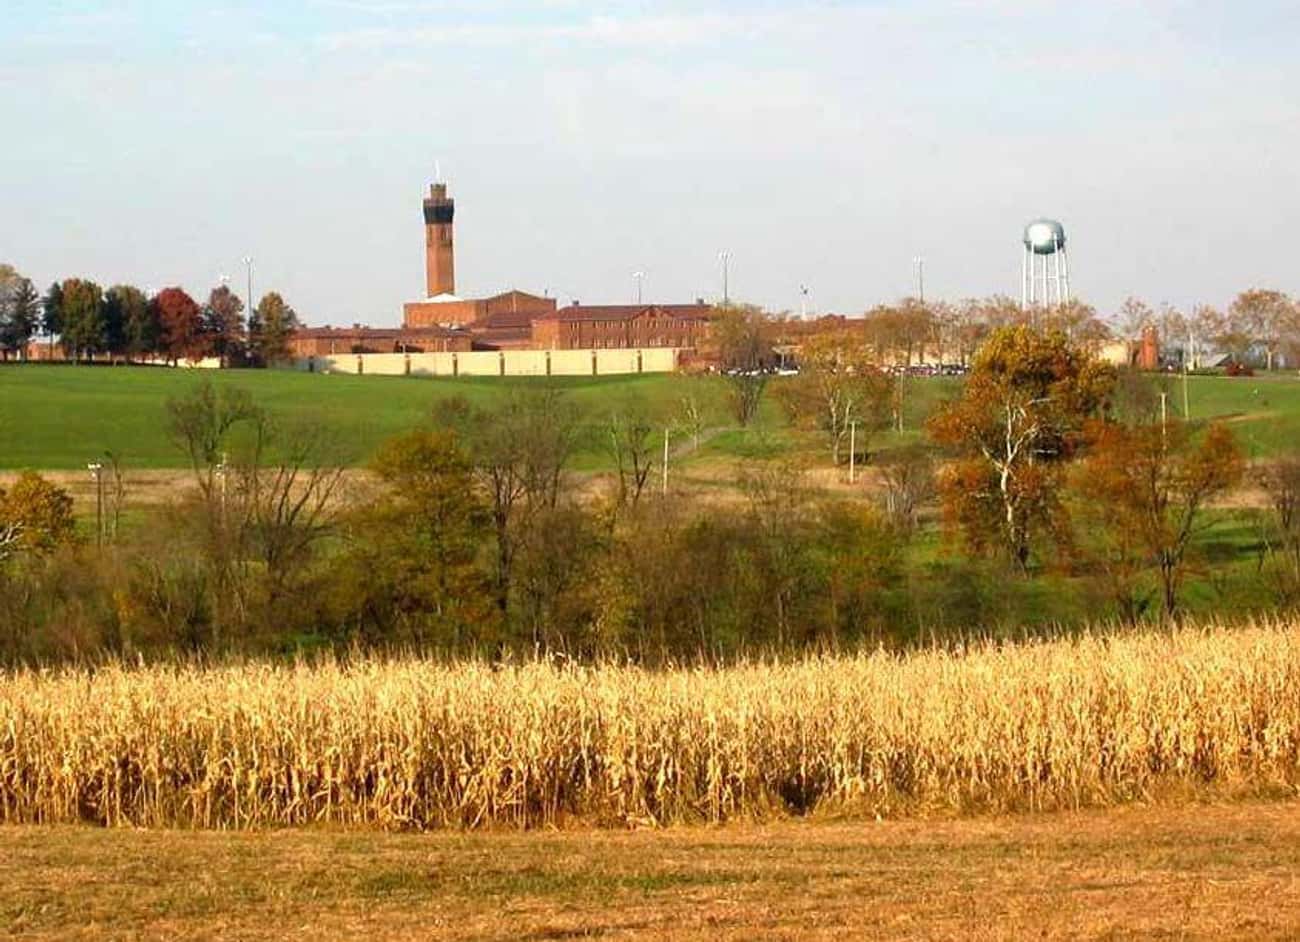 United States Penitentiary Lewisburg (Lewisburg, Pennsylvania) 